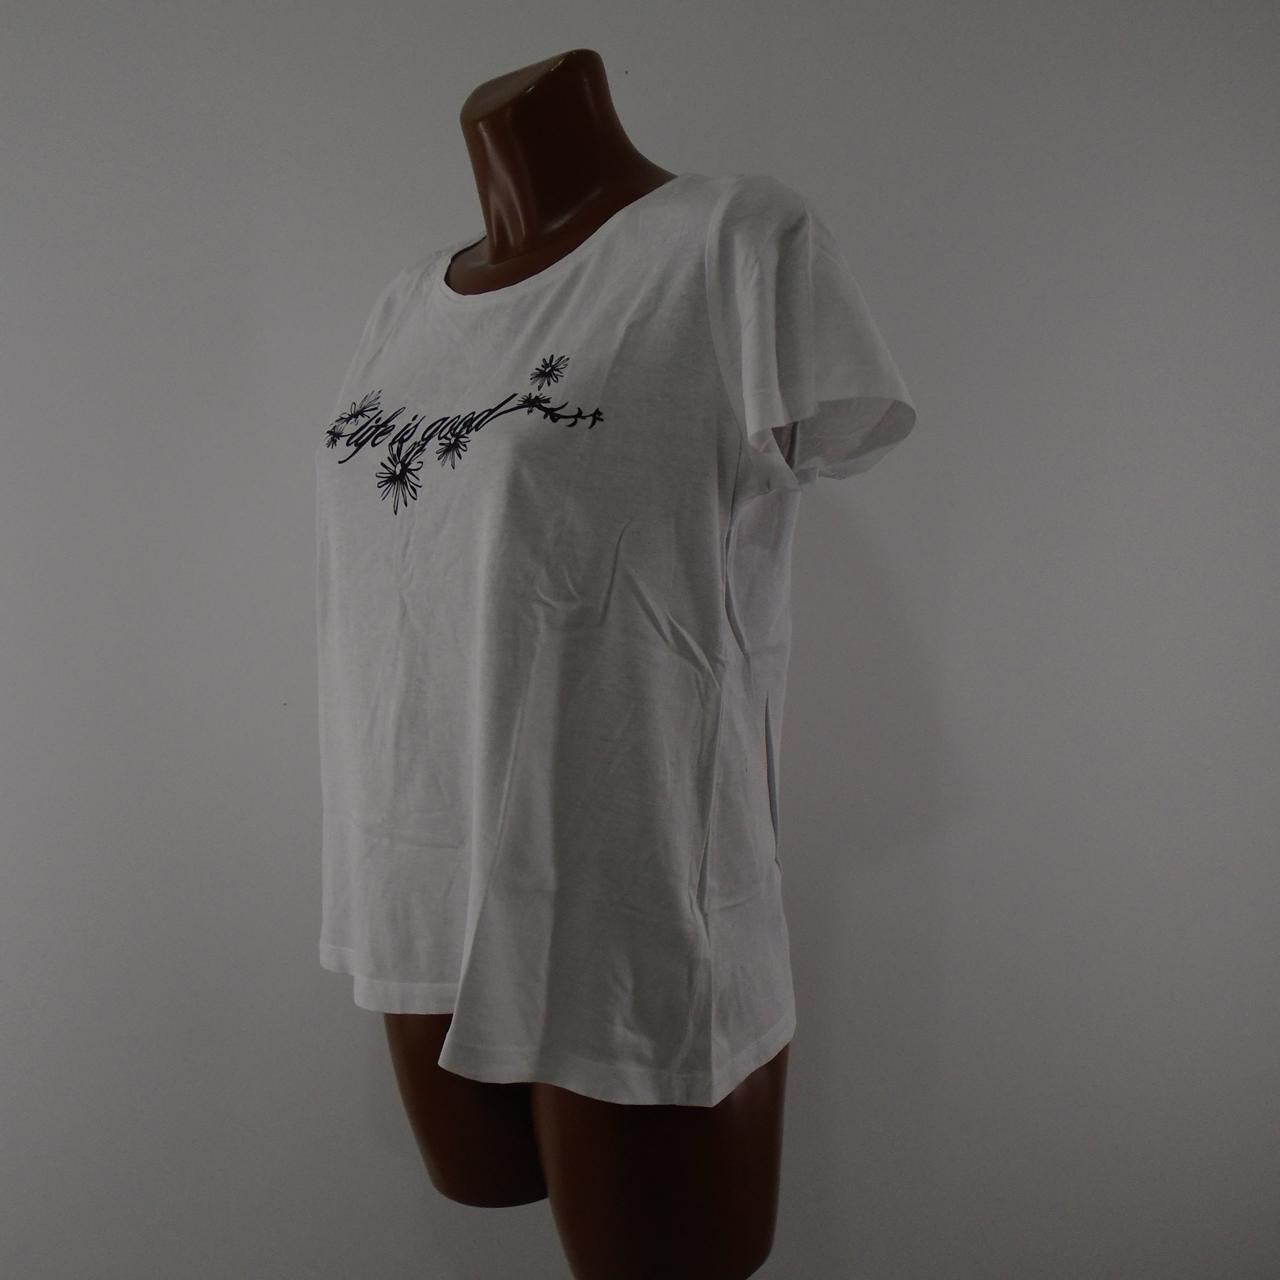 Damen-T-Shirt Esmara. Weiß. L. Gebraucht. Gut